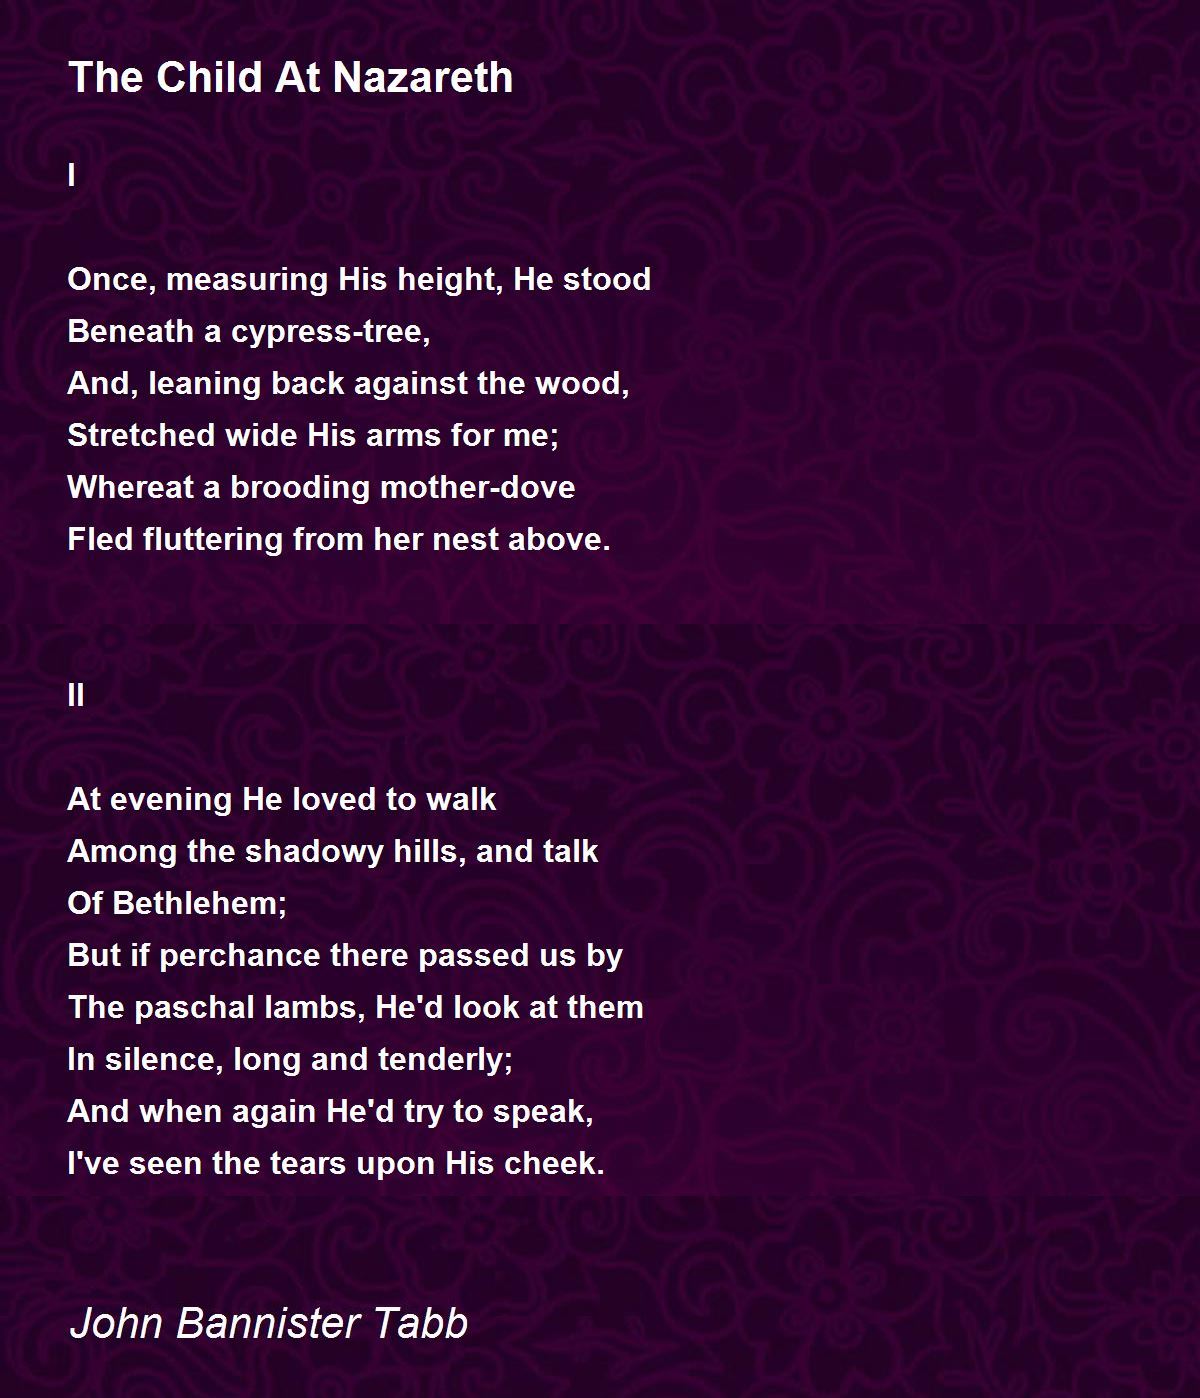 The Child At Nazareth Poem by John Bannister Tabb - Poem Hunter